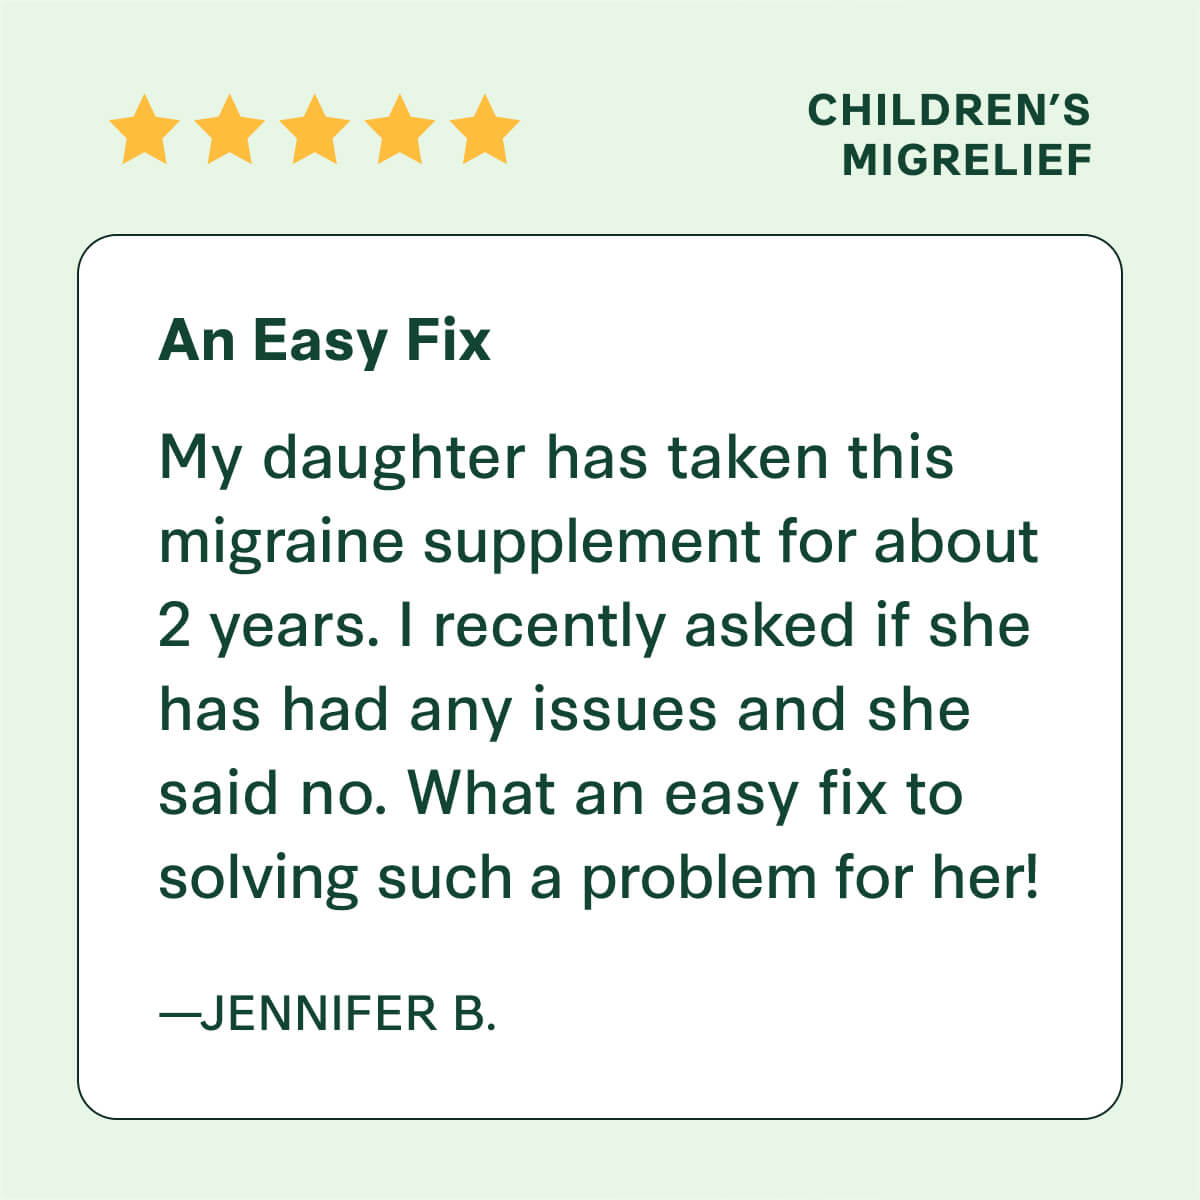 Customer review of Children's MigreLief.